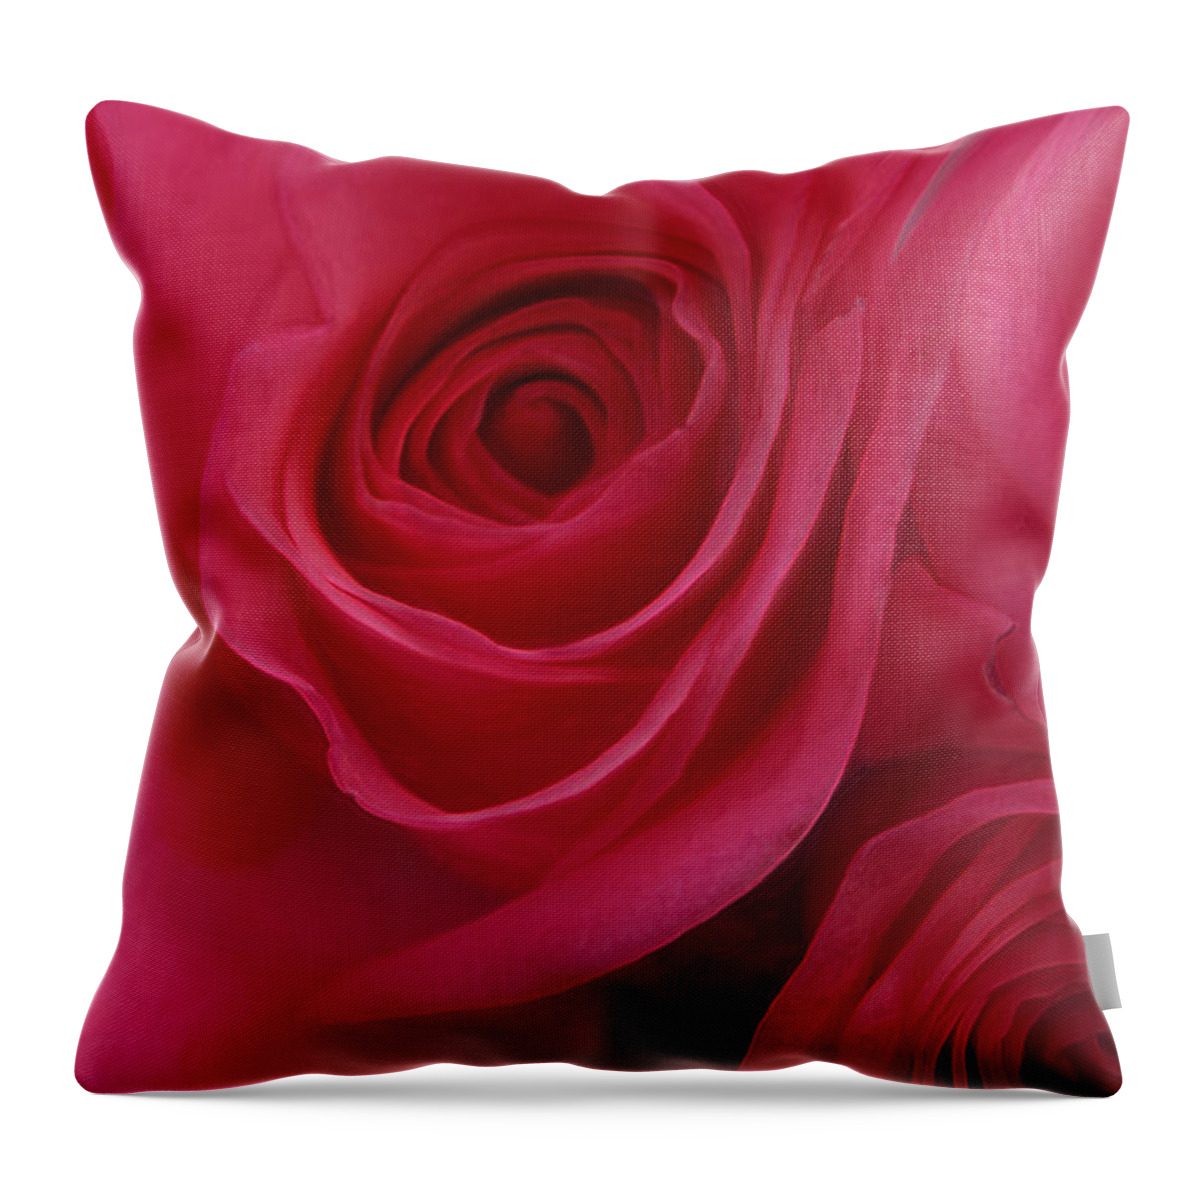 Sensual Rose Throw Pillow featuring the photograph Sensual Rose by Linda Sannuti